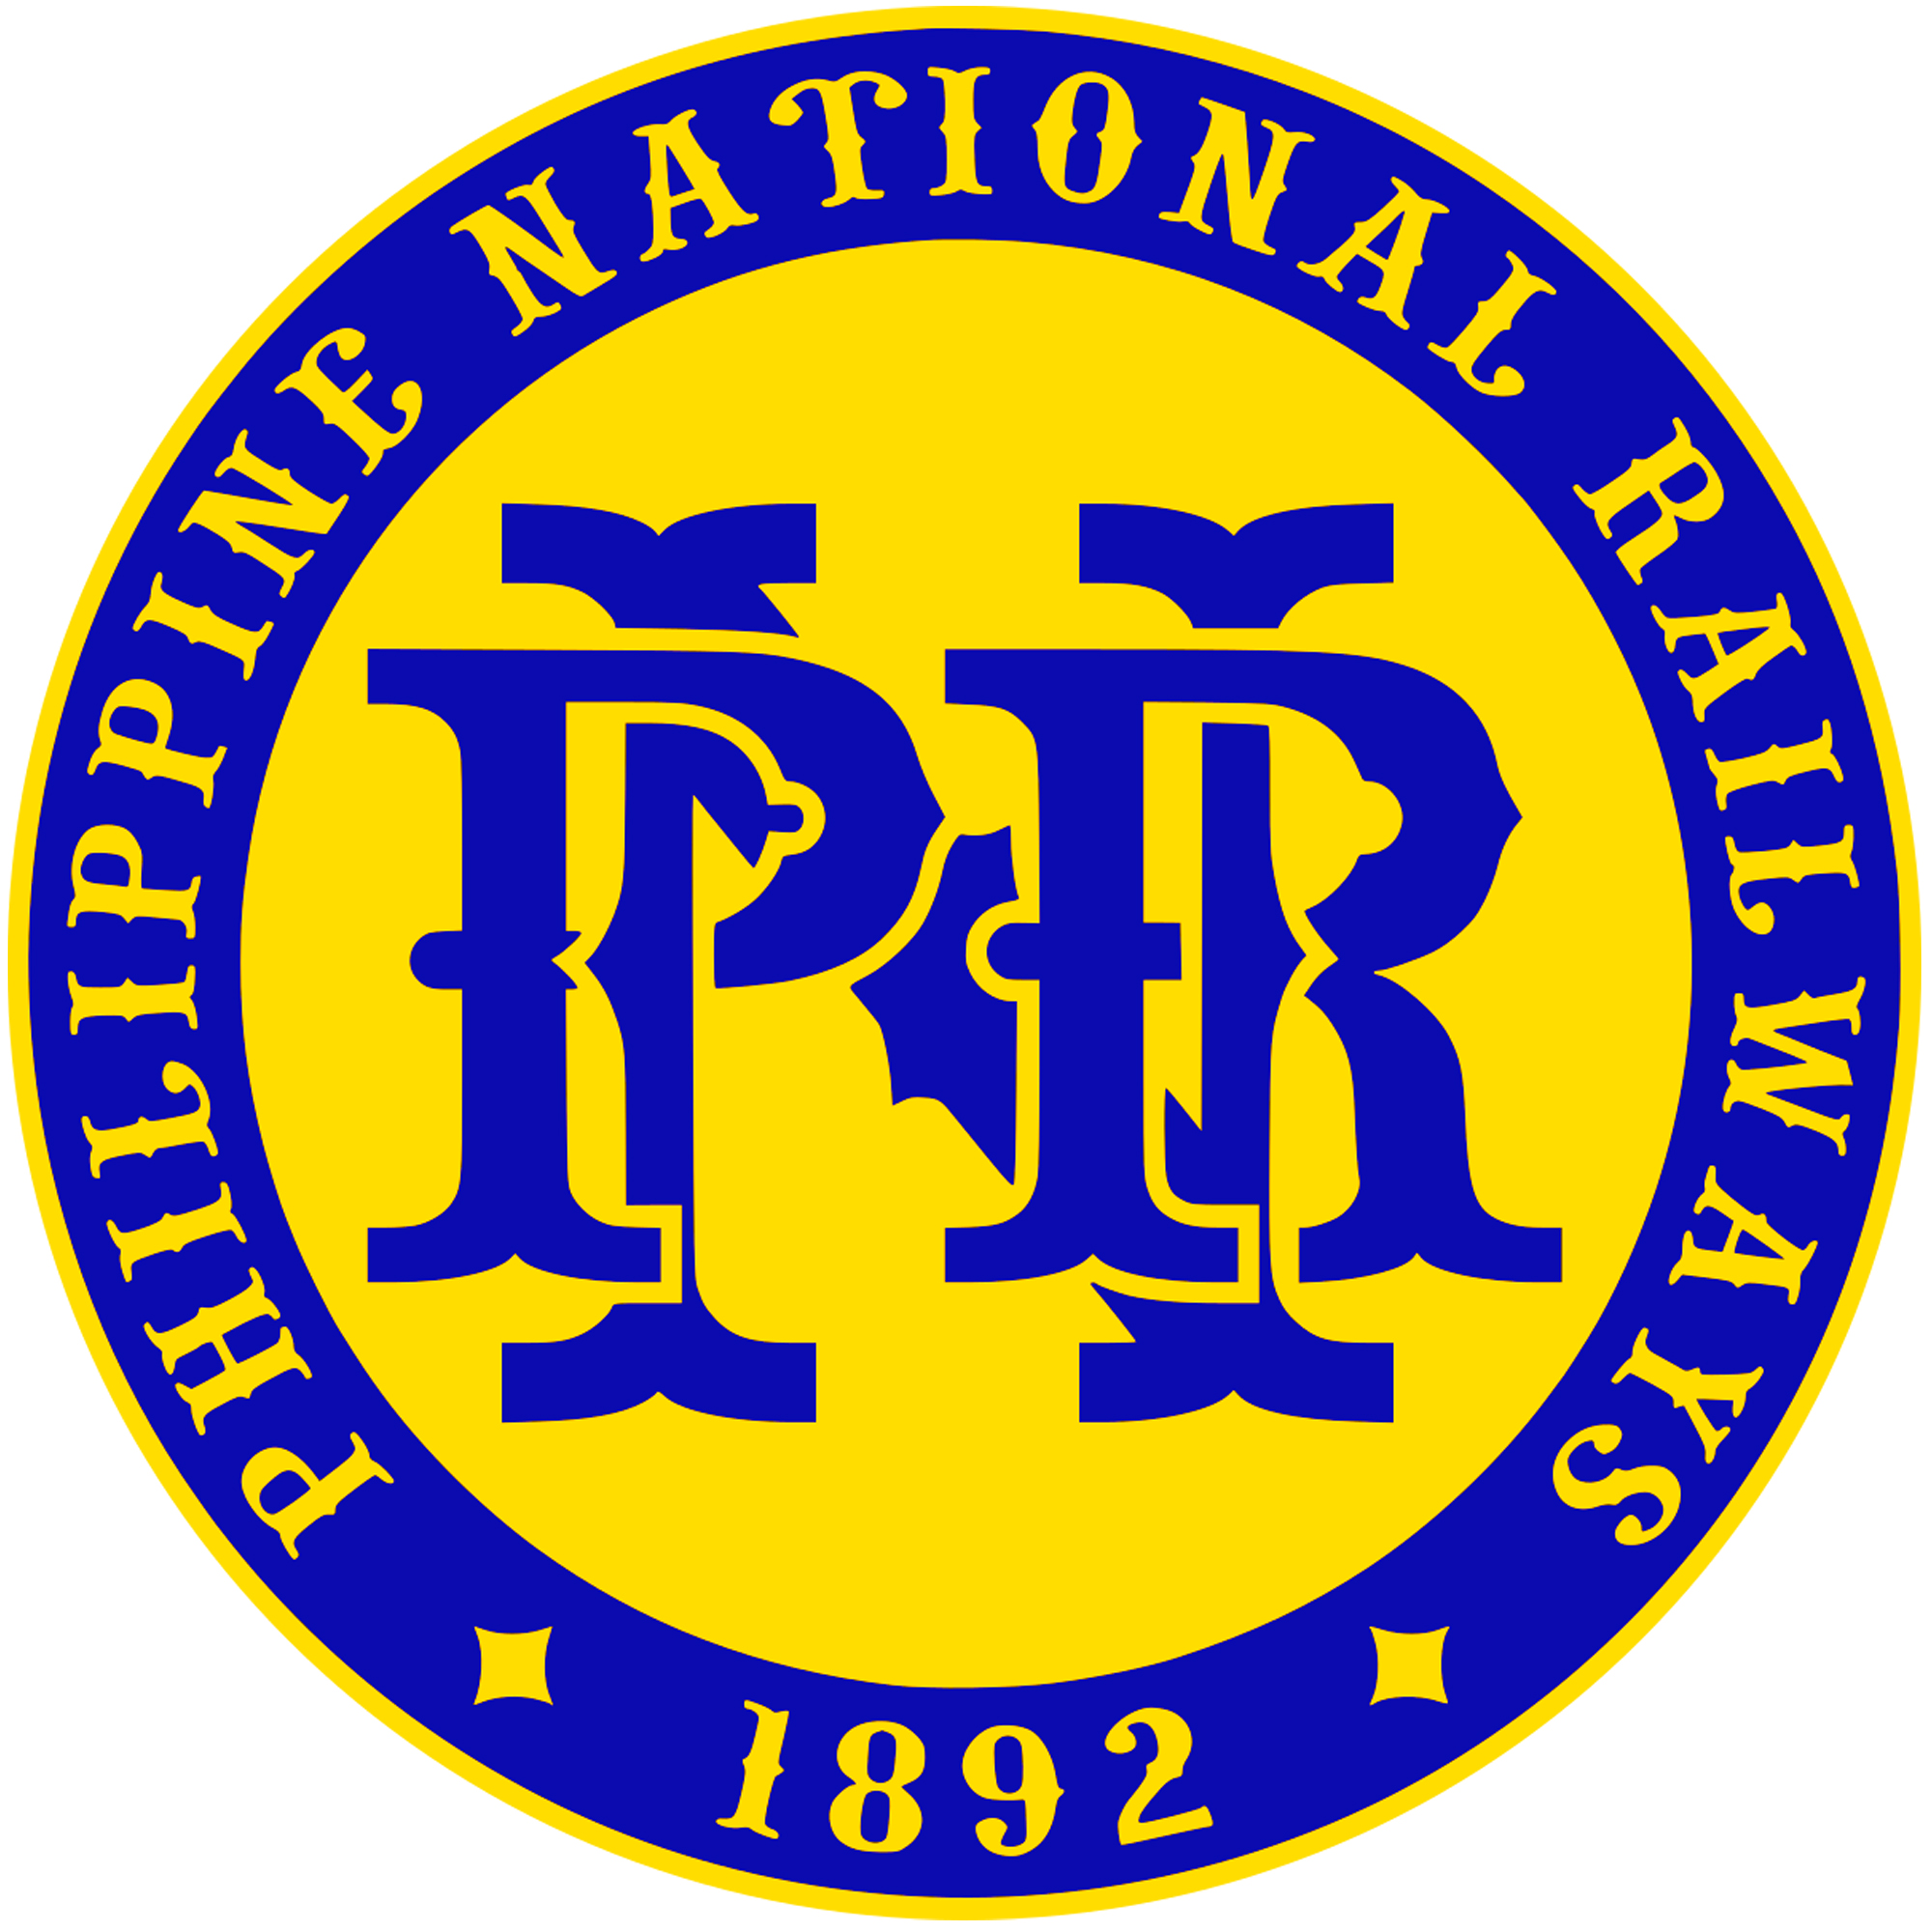 Philippine National Railways